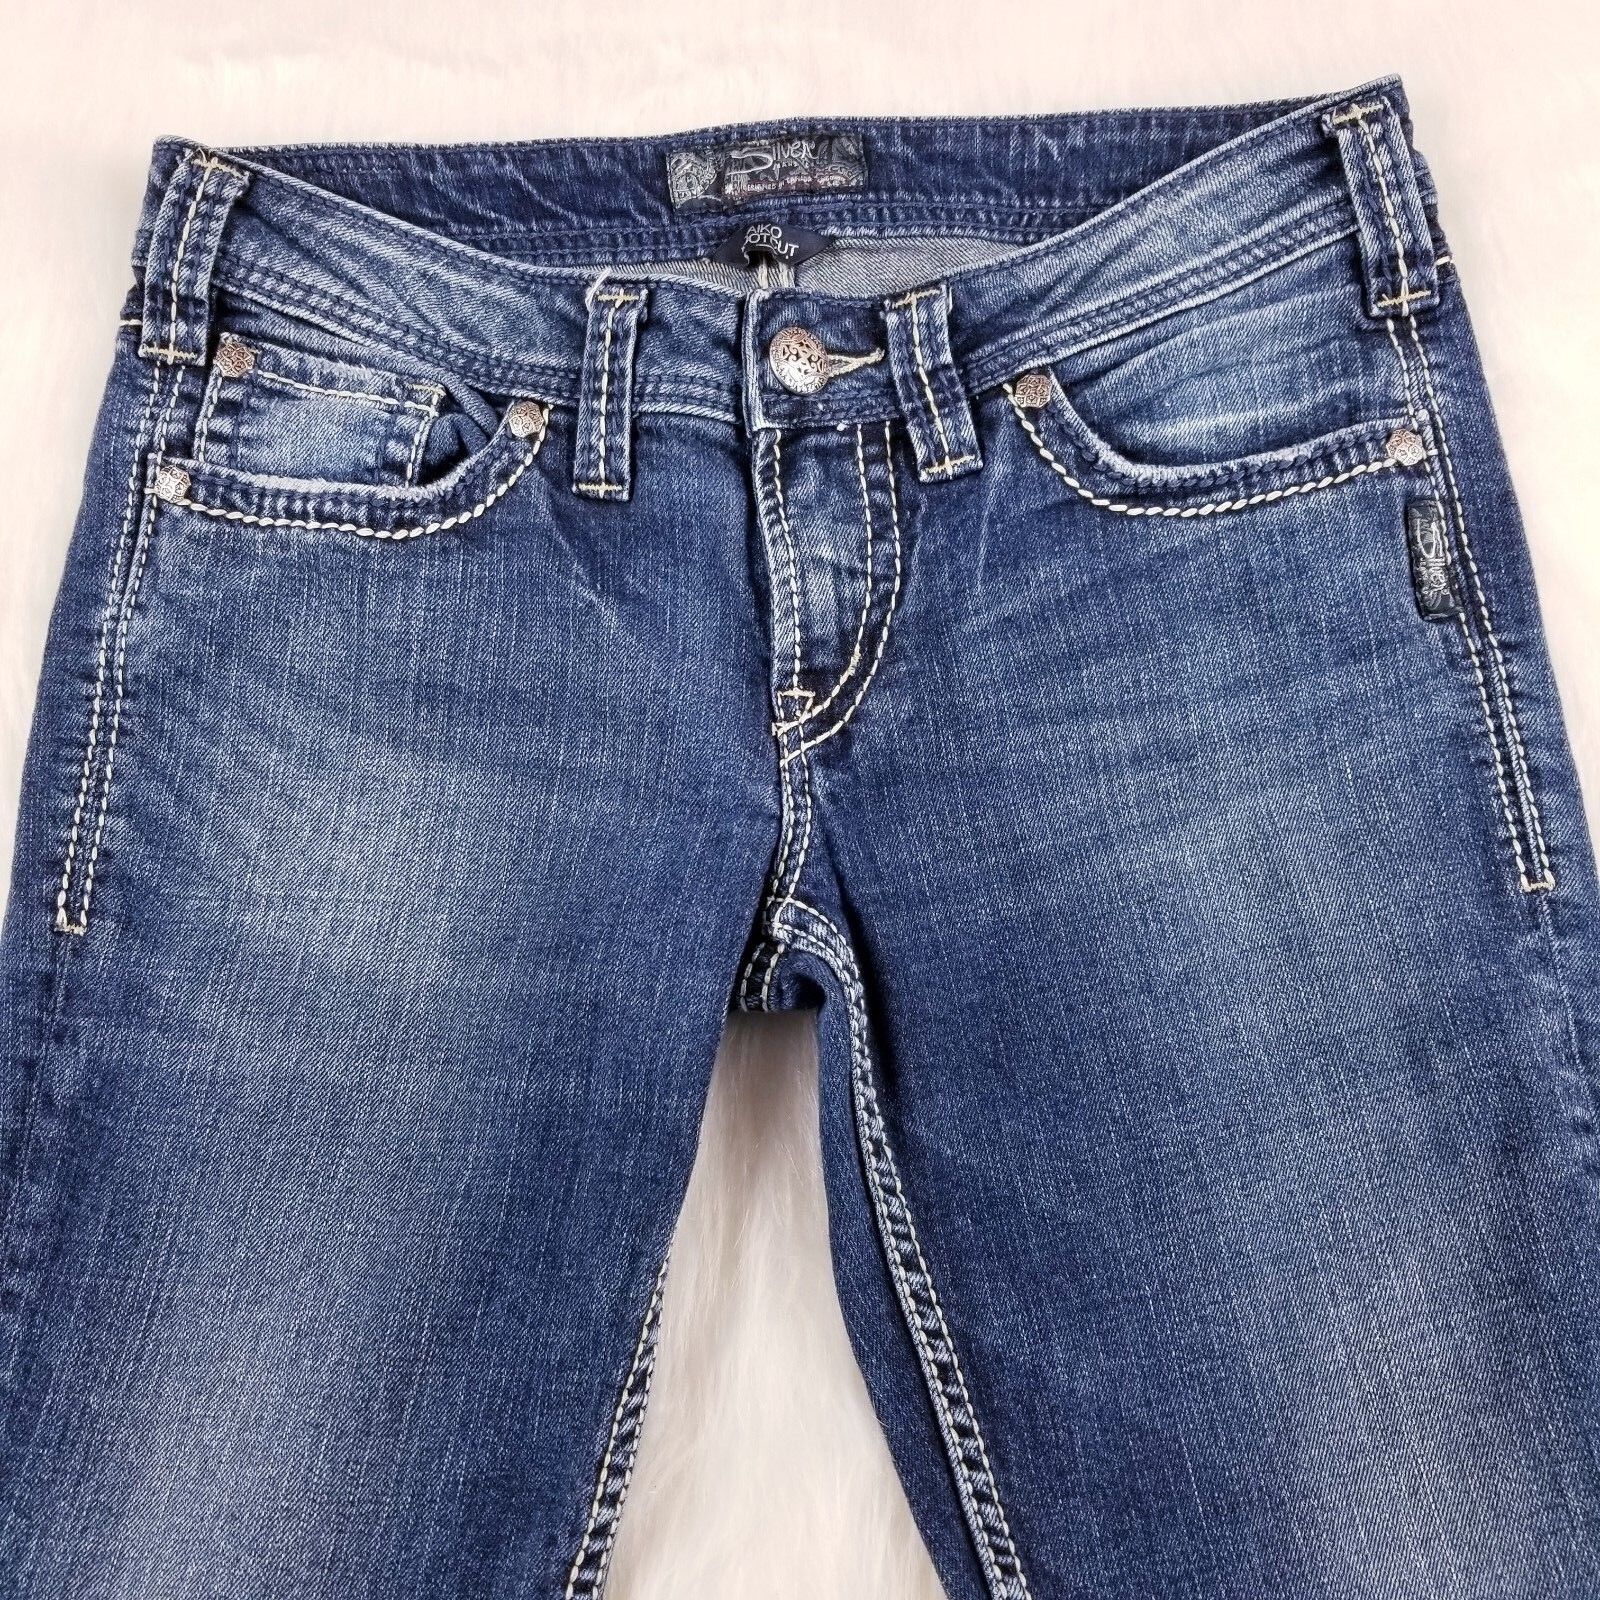 Silver Aiko Bootcut Women's Jeans Size 29/29 Measured 31x27 | eBay